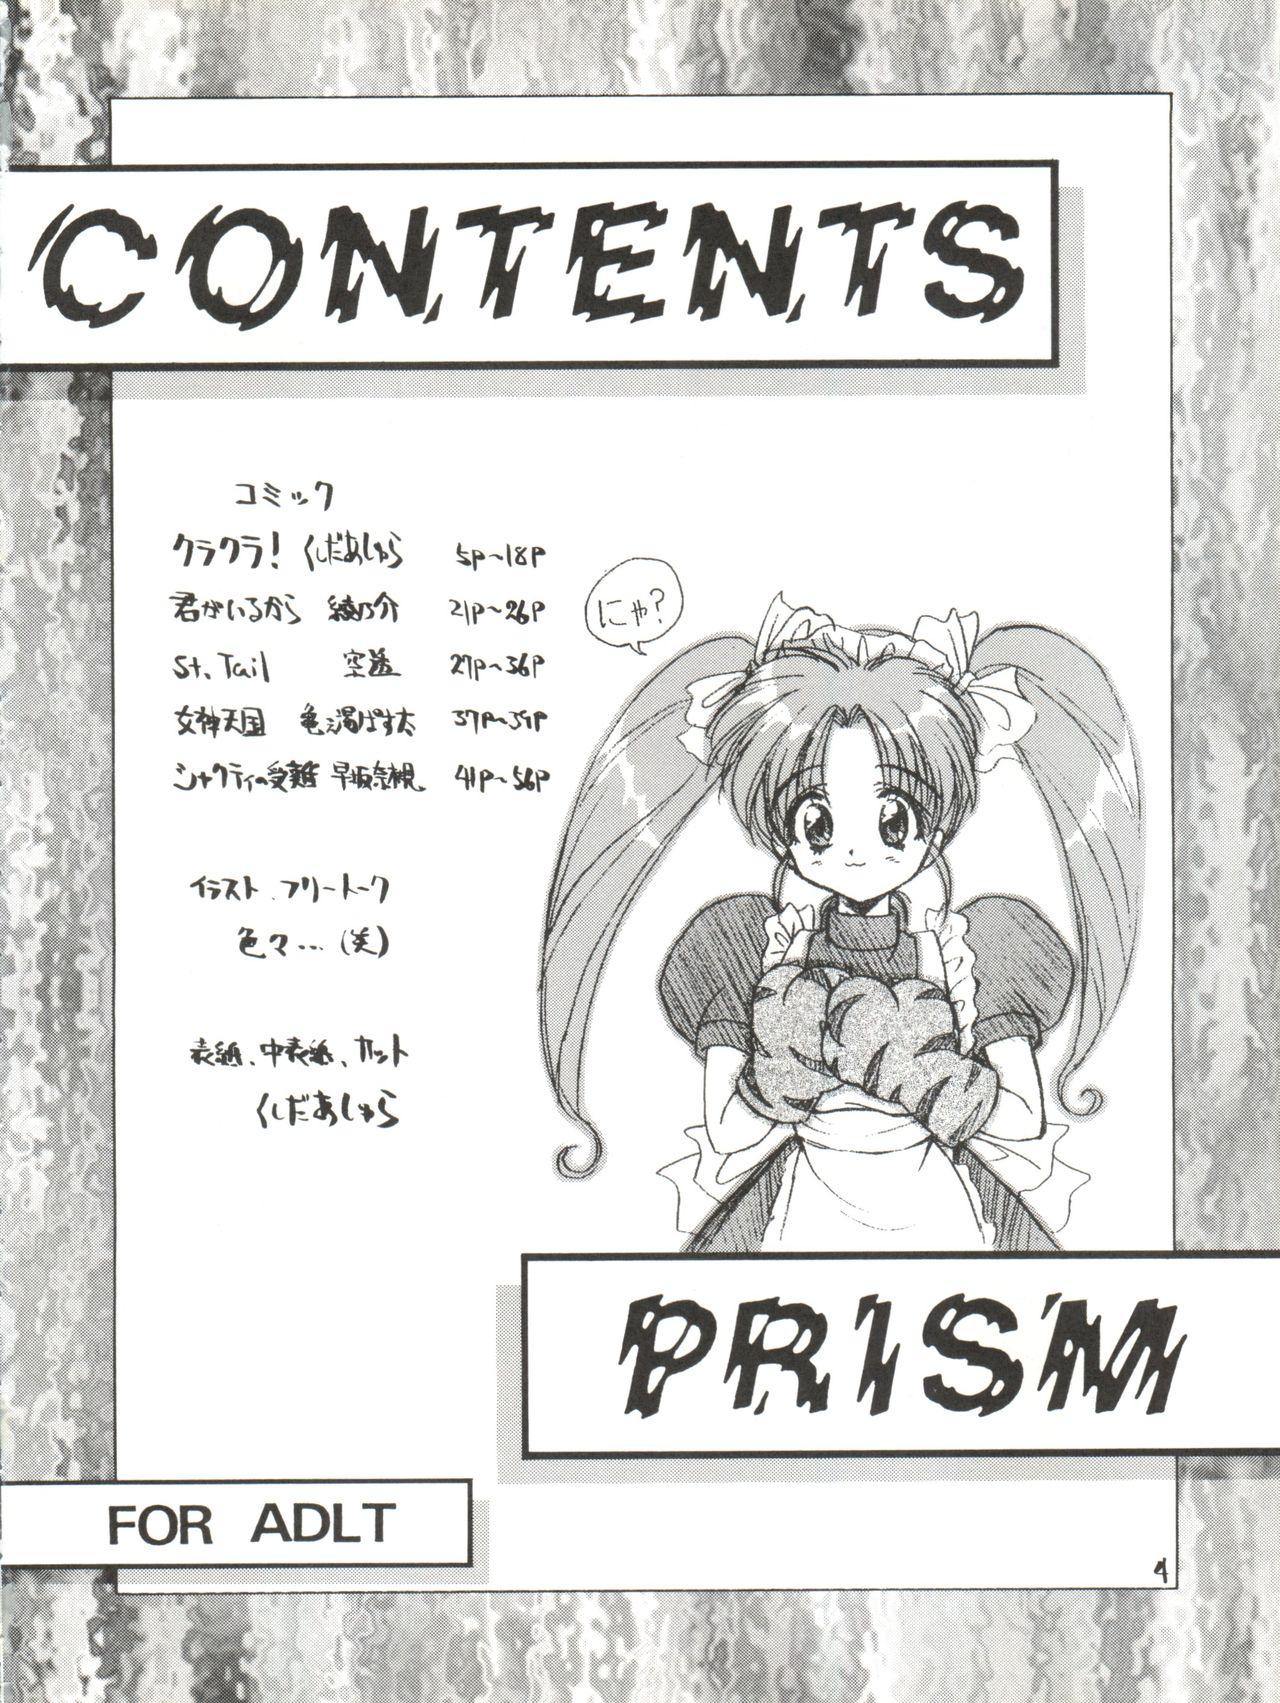 Face Fucking PRISM - Tokimeki memorial Saint tail Wedding peach Victory gundam Megami paradise Butt Sex - Page 4